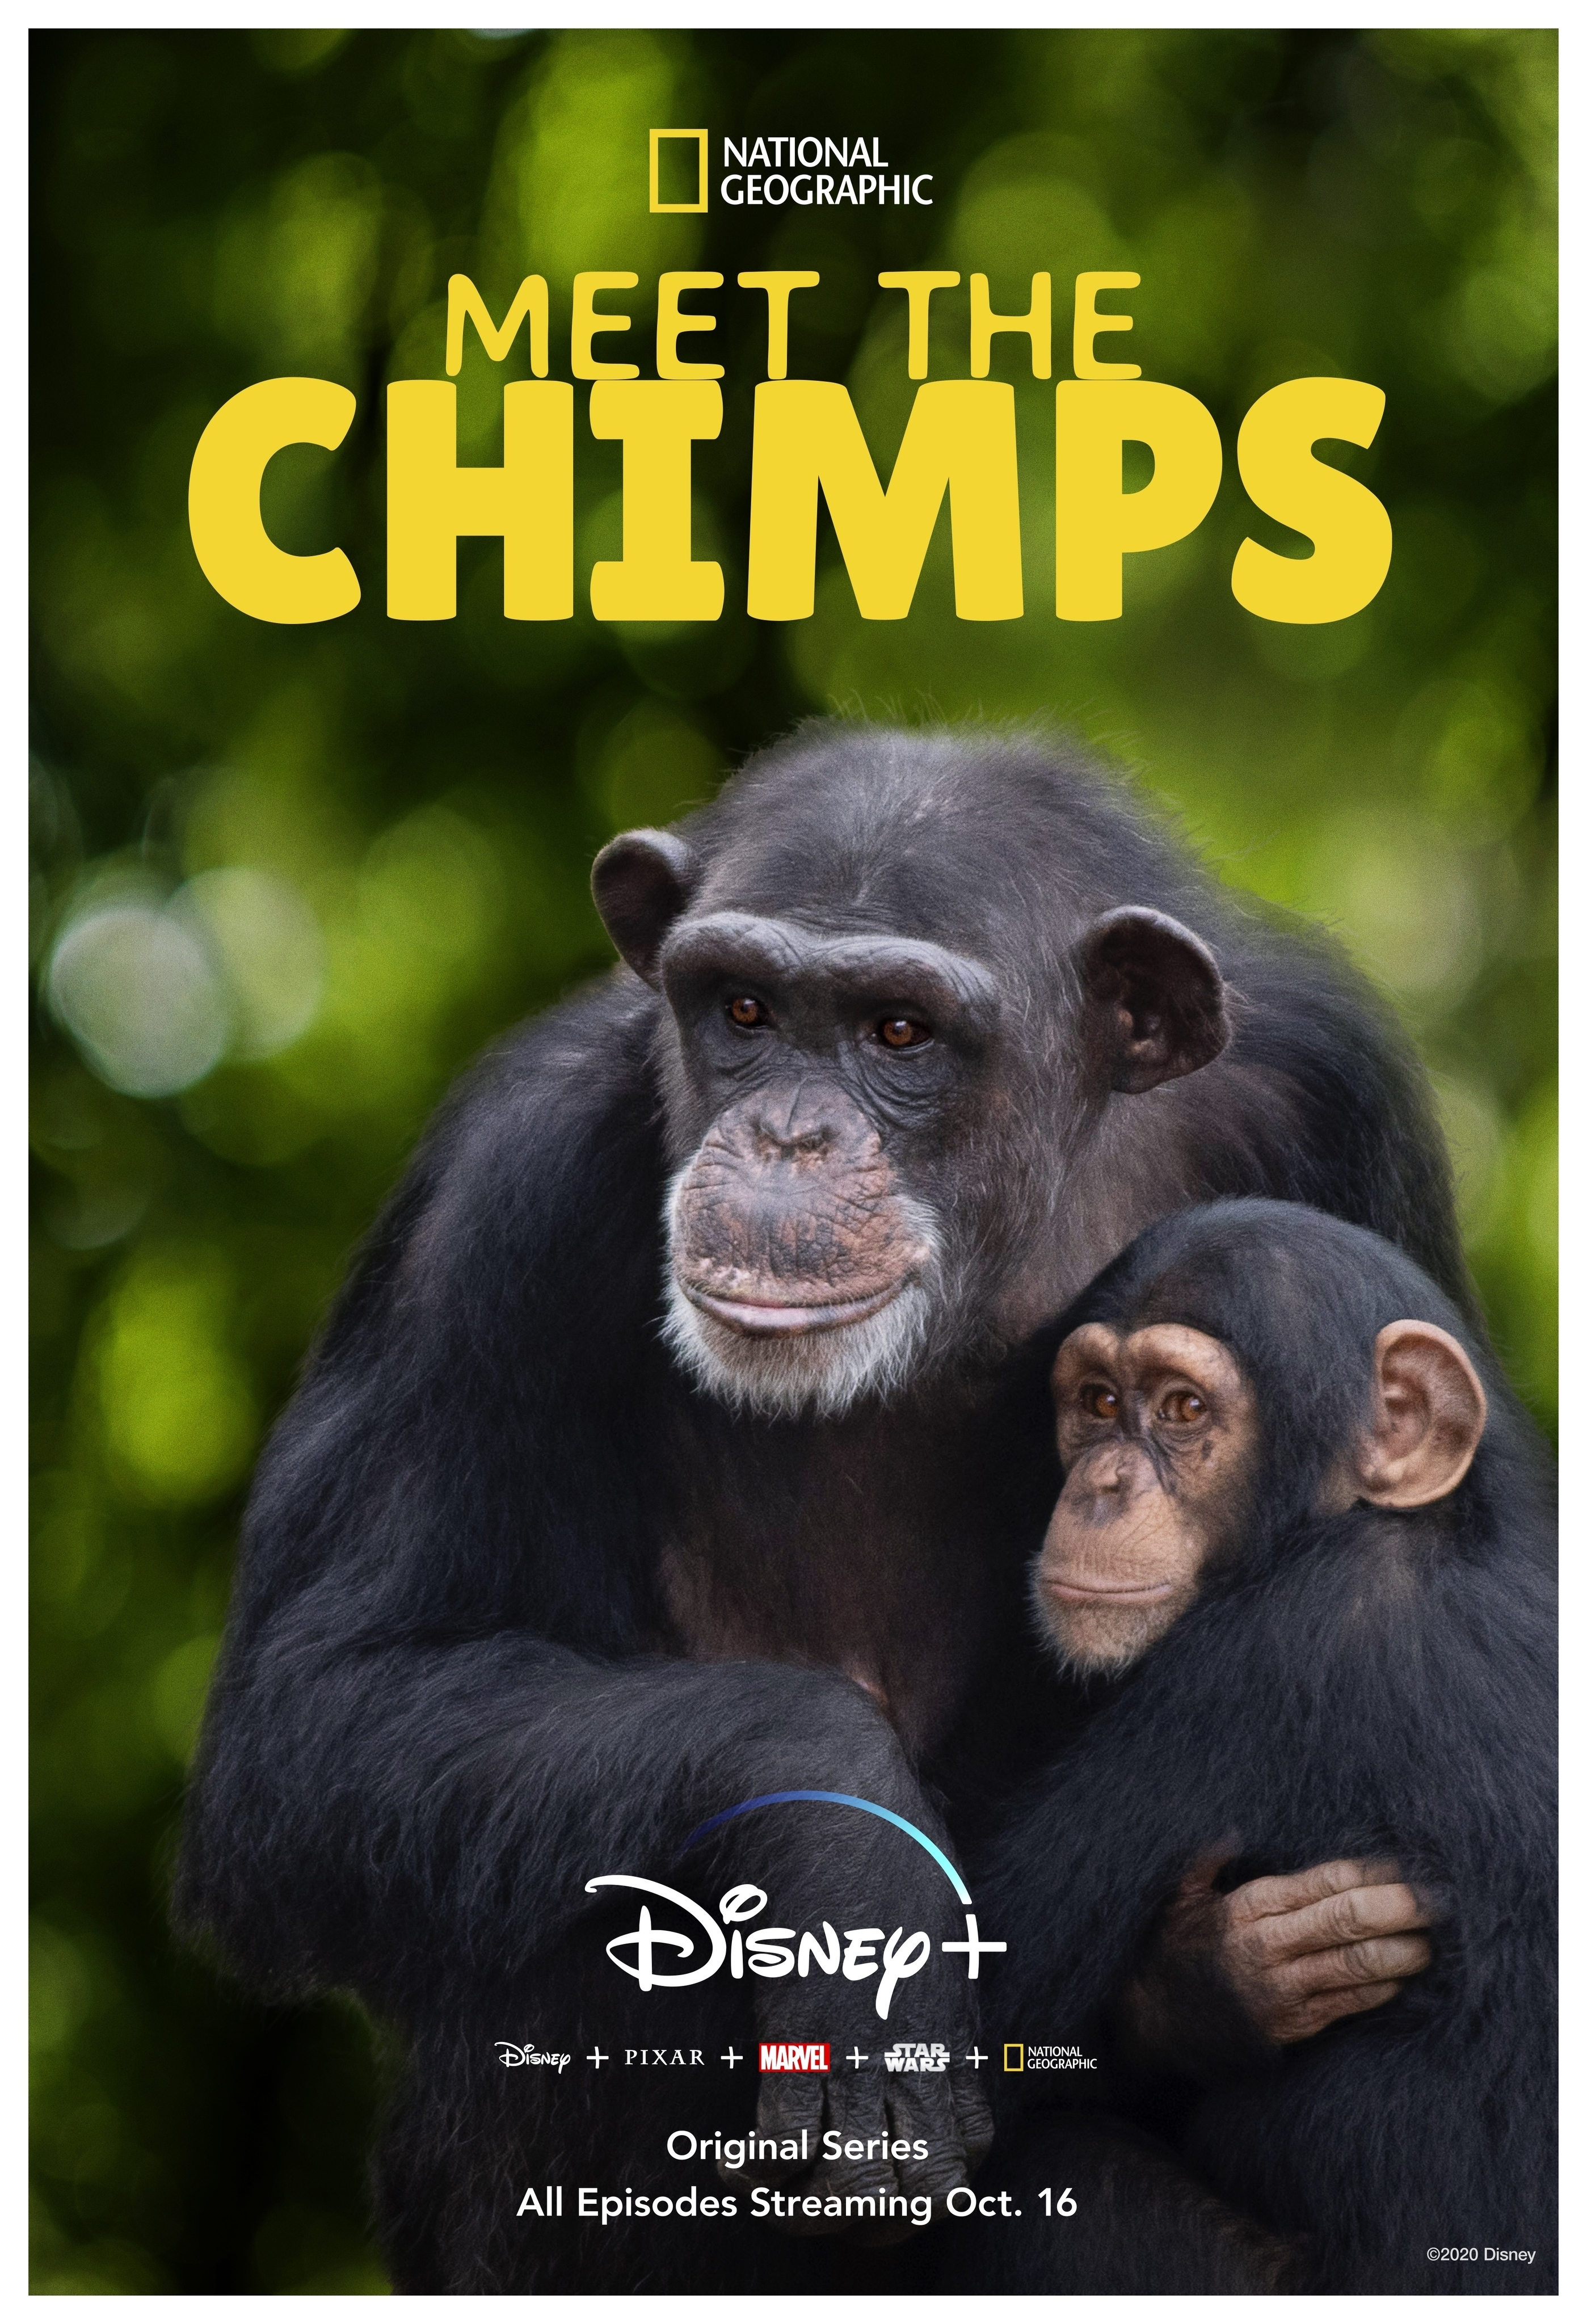 Meet the Chimps on Disney+